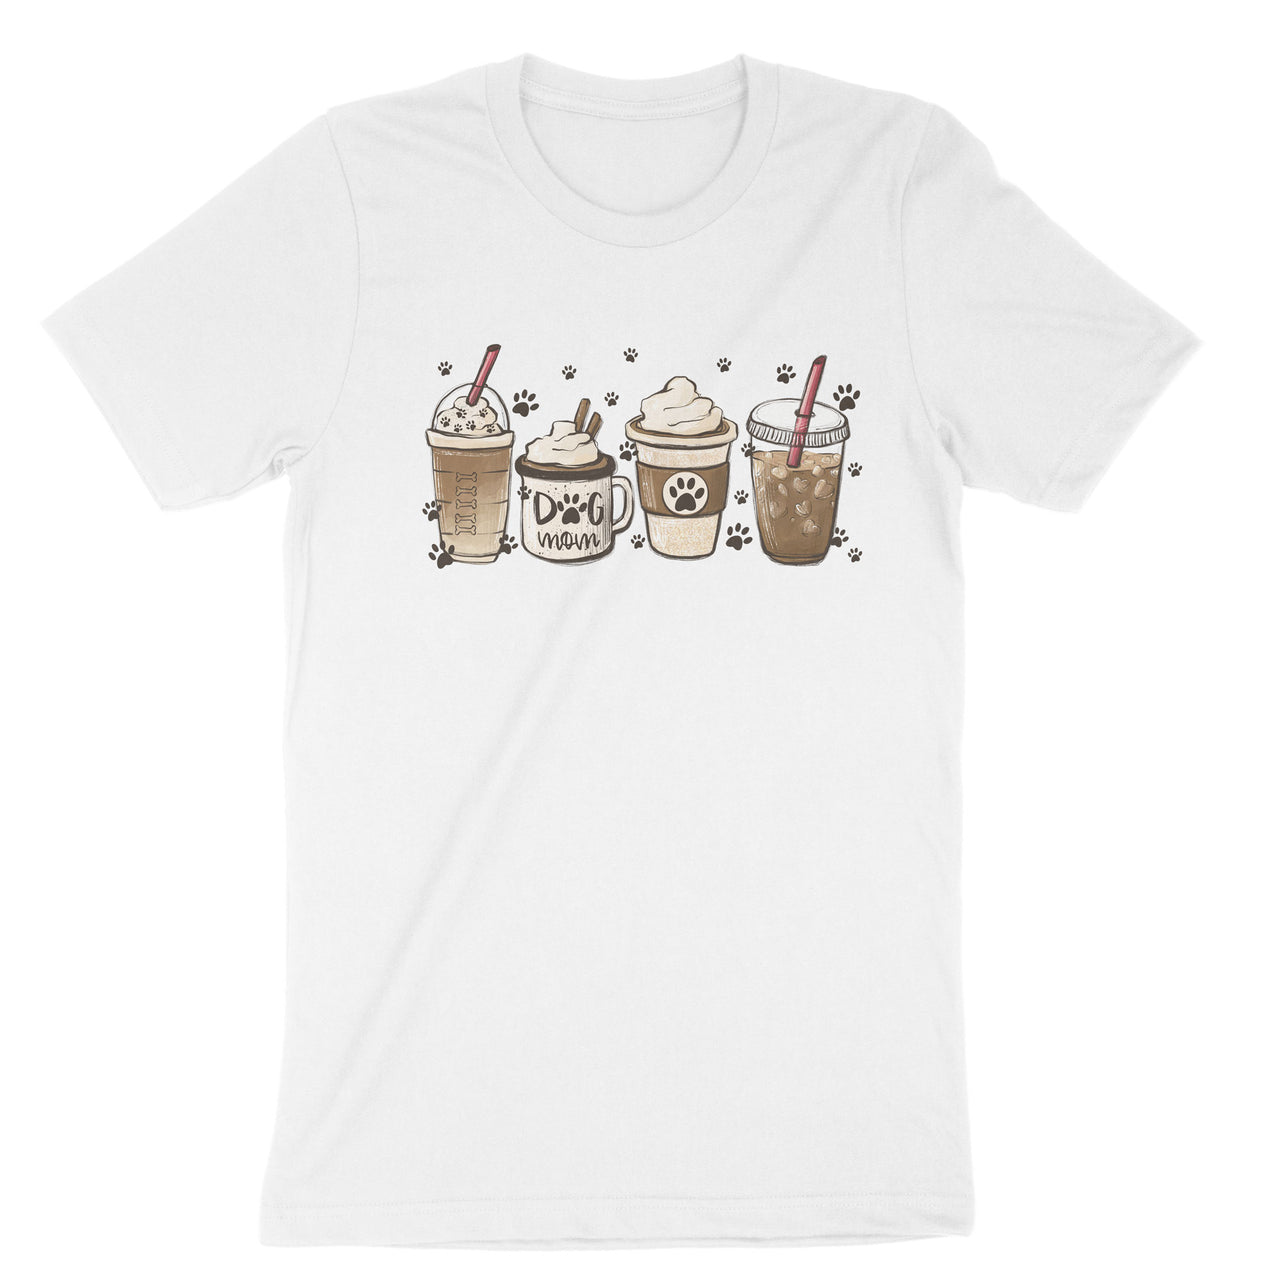 Coffee and Dogs T-Shirt, Iced Coffee Latte Dog Lover Tee Shirt